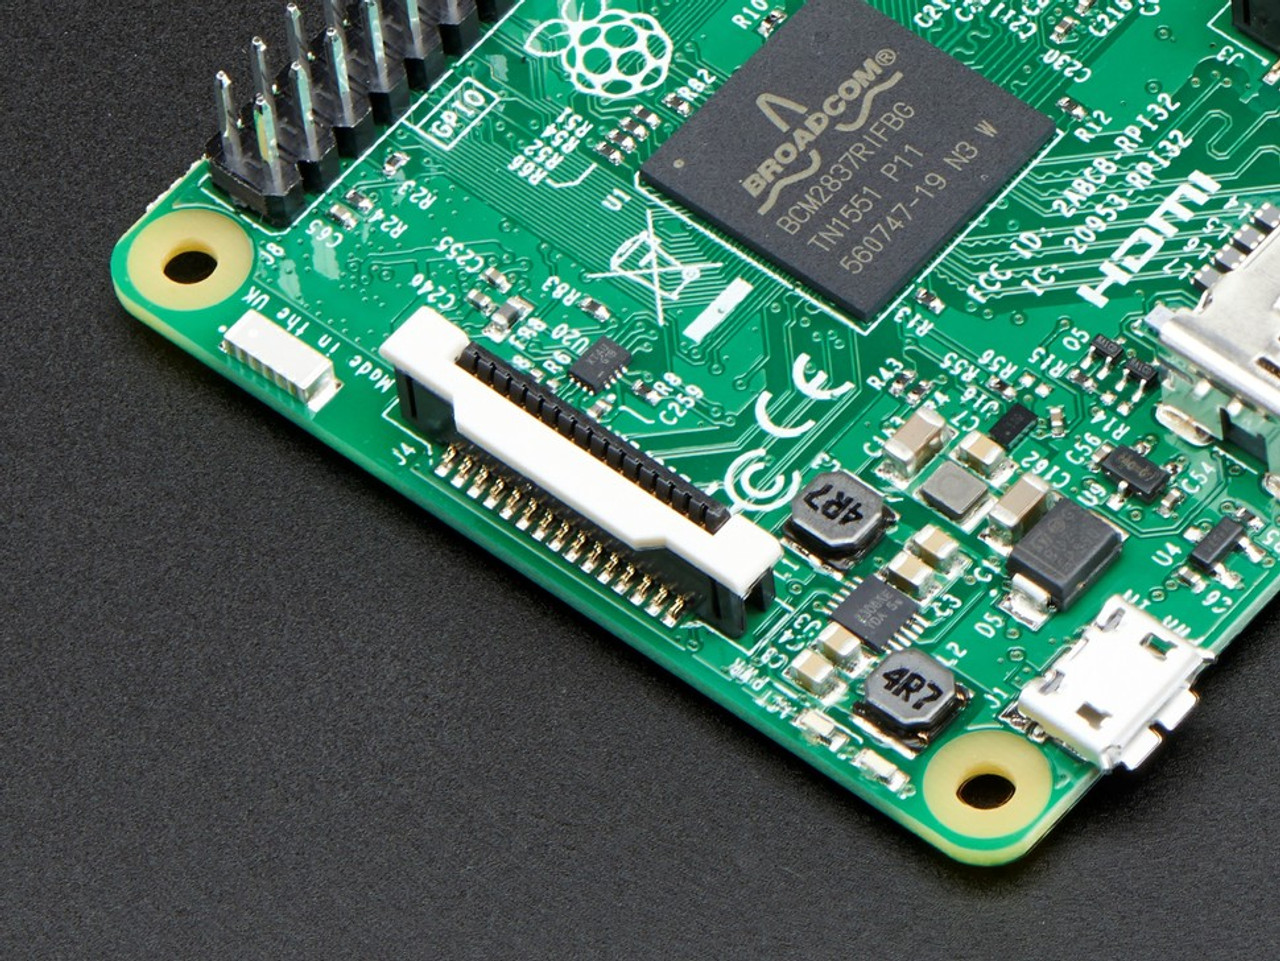 Replacement CSI/DSI Connector for Raspberry Pi - Repair Part